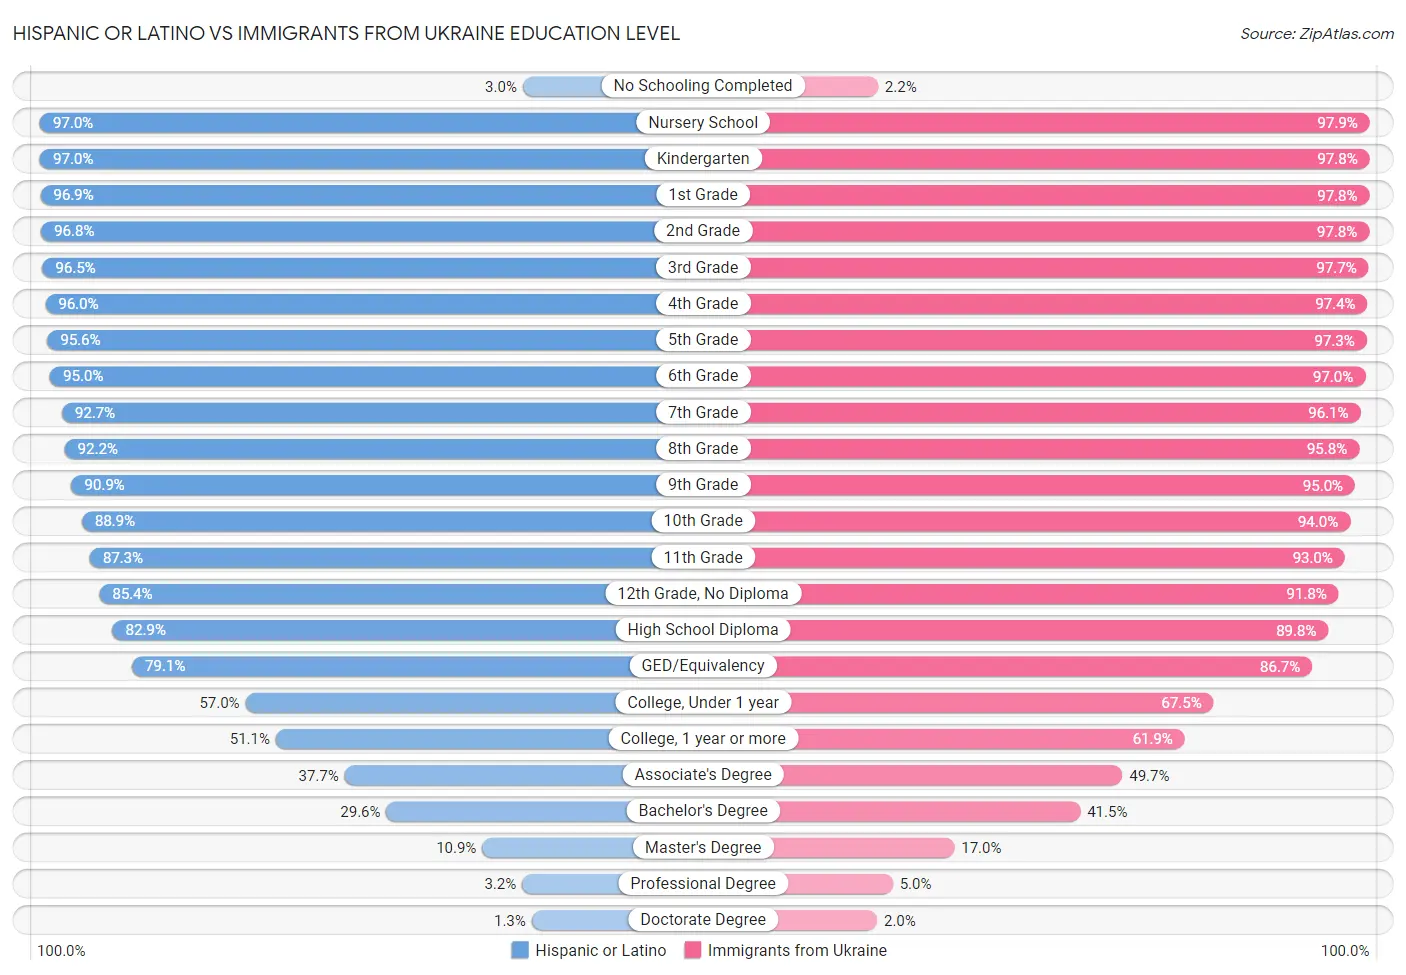 Hispanic or Latino vs Immigrants from Ukraine Education Level